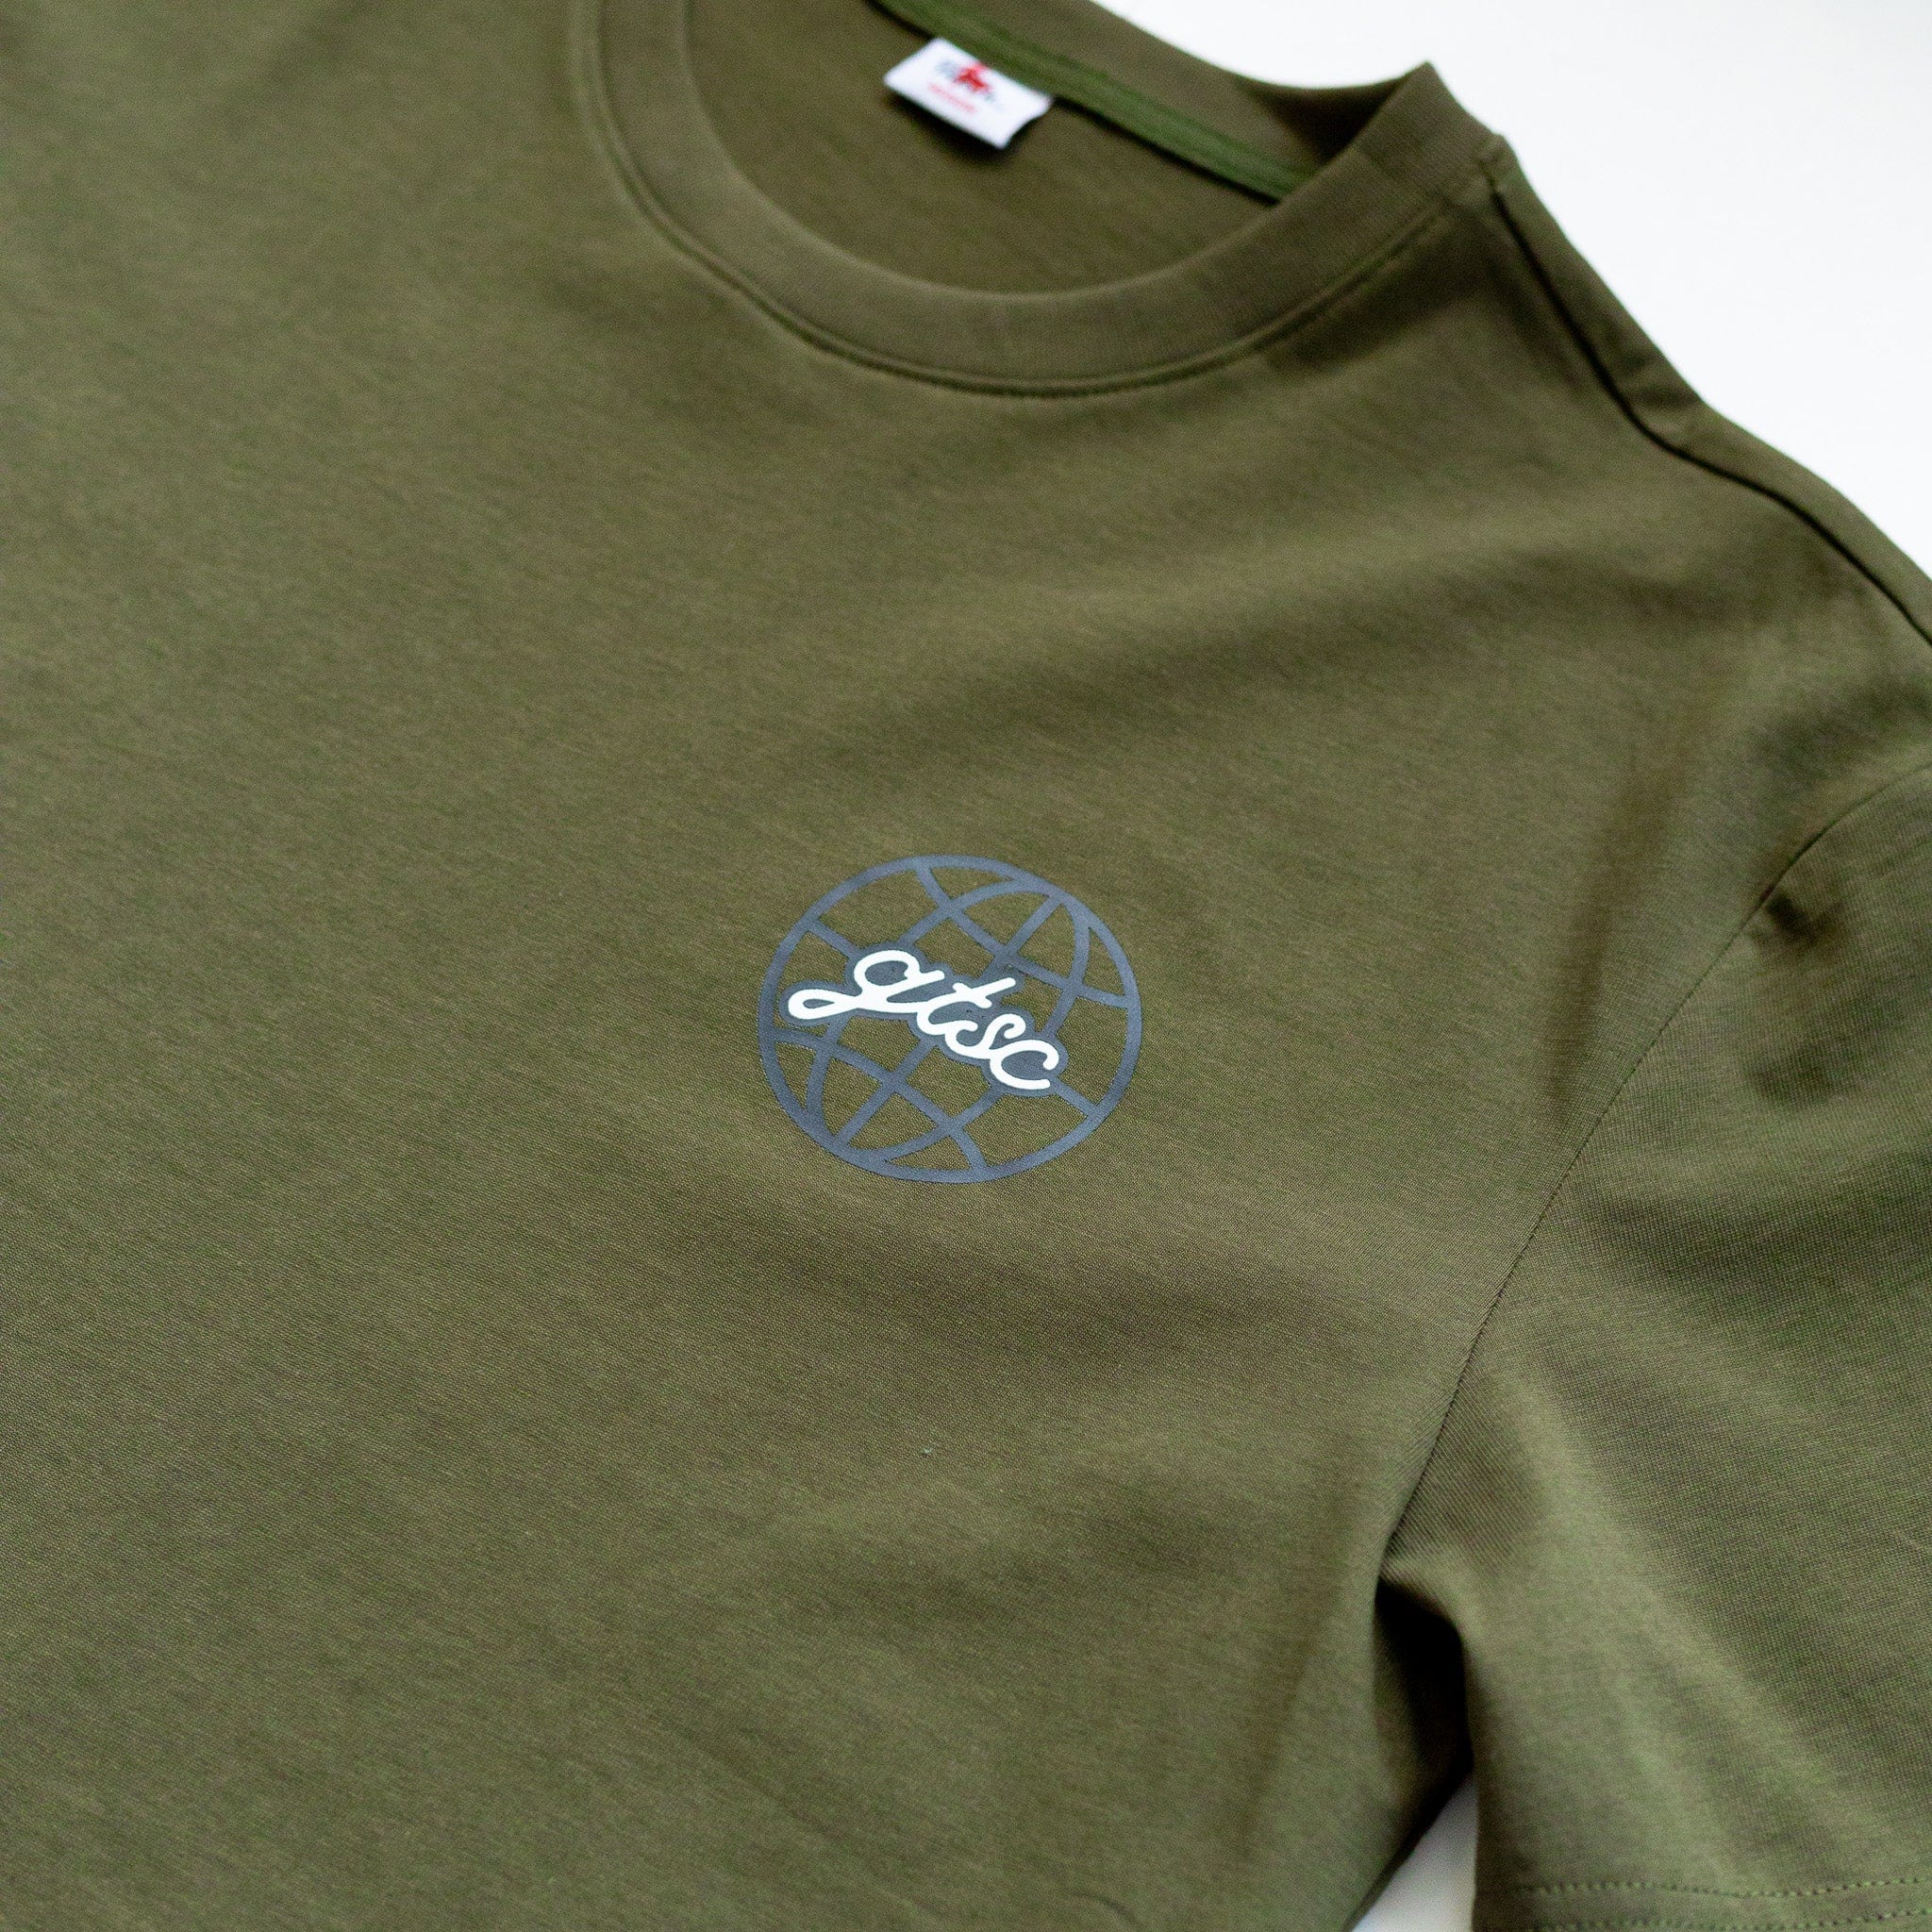 World Tour Tee (Moss) Shirts Canada-Golf-Lifestyle-Clothing-Brand